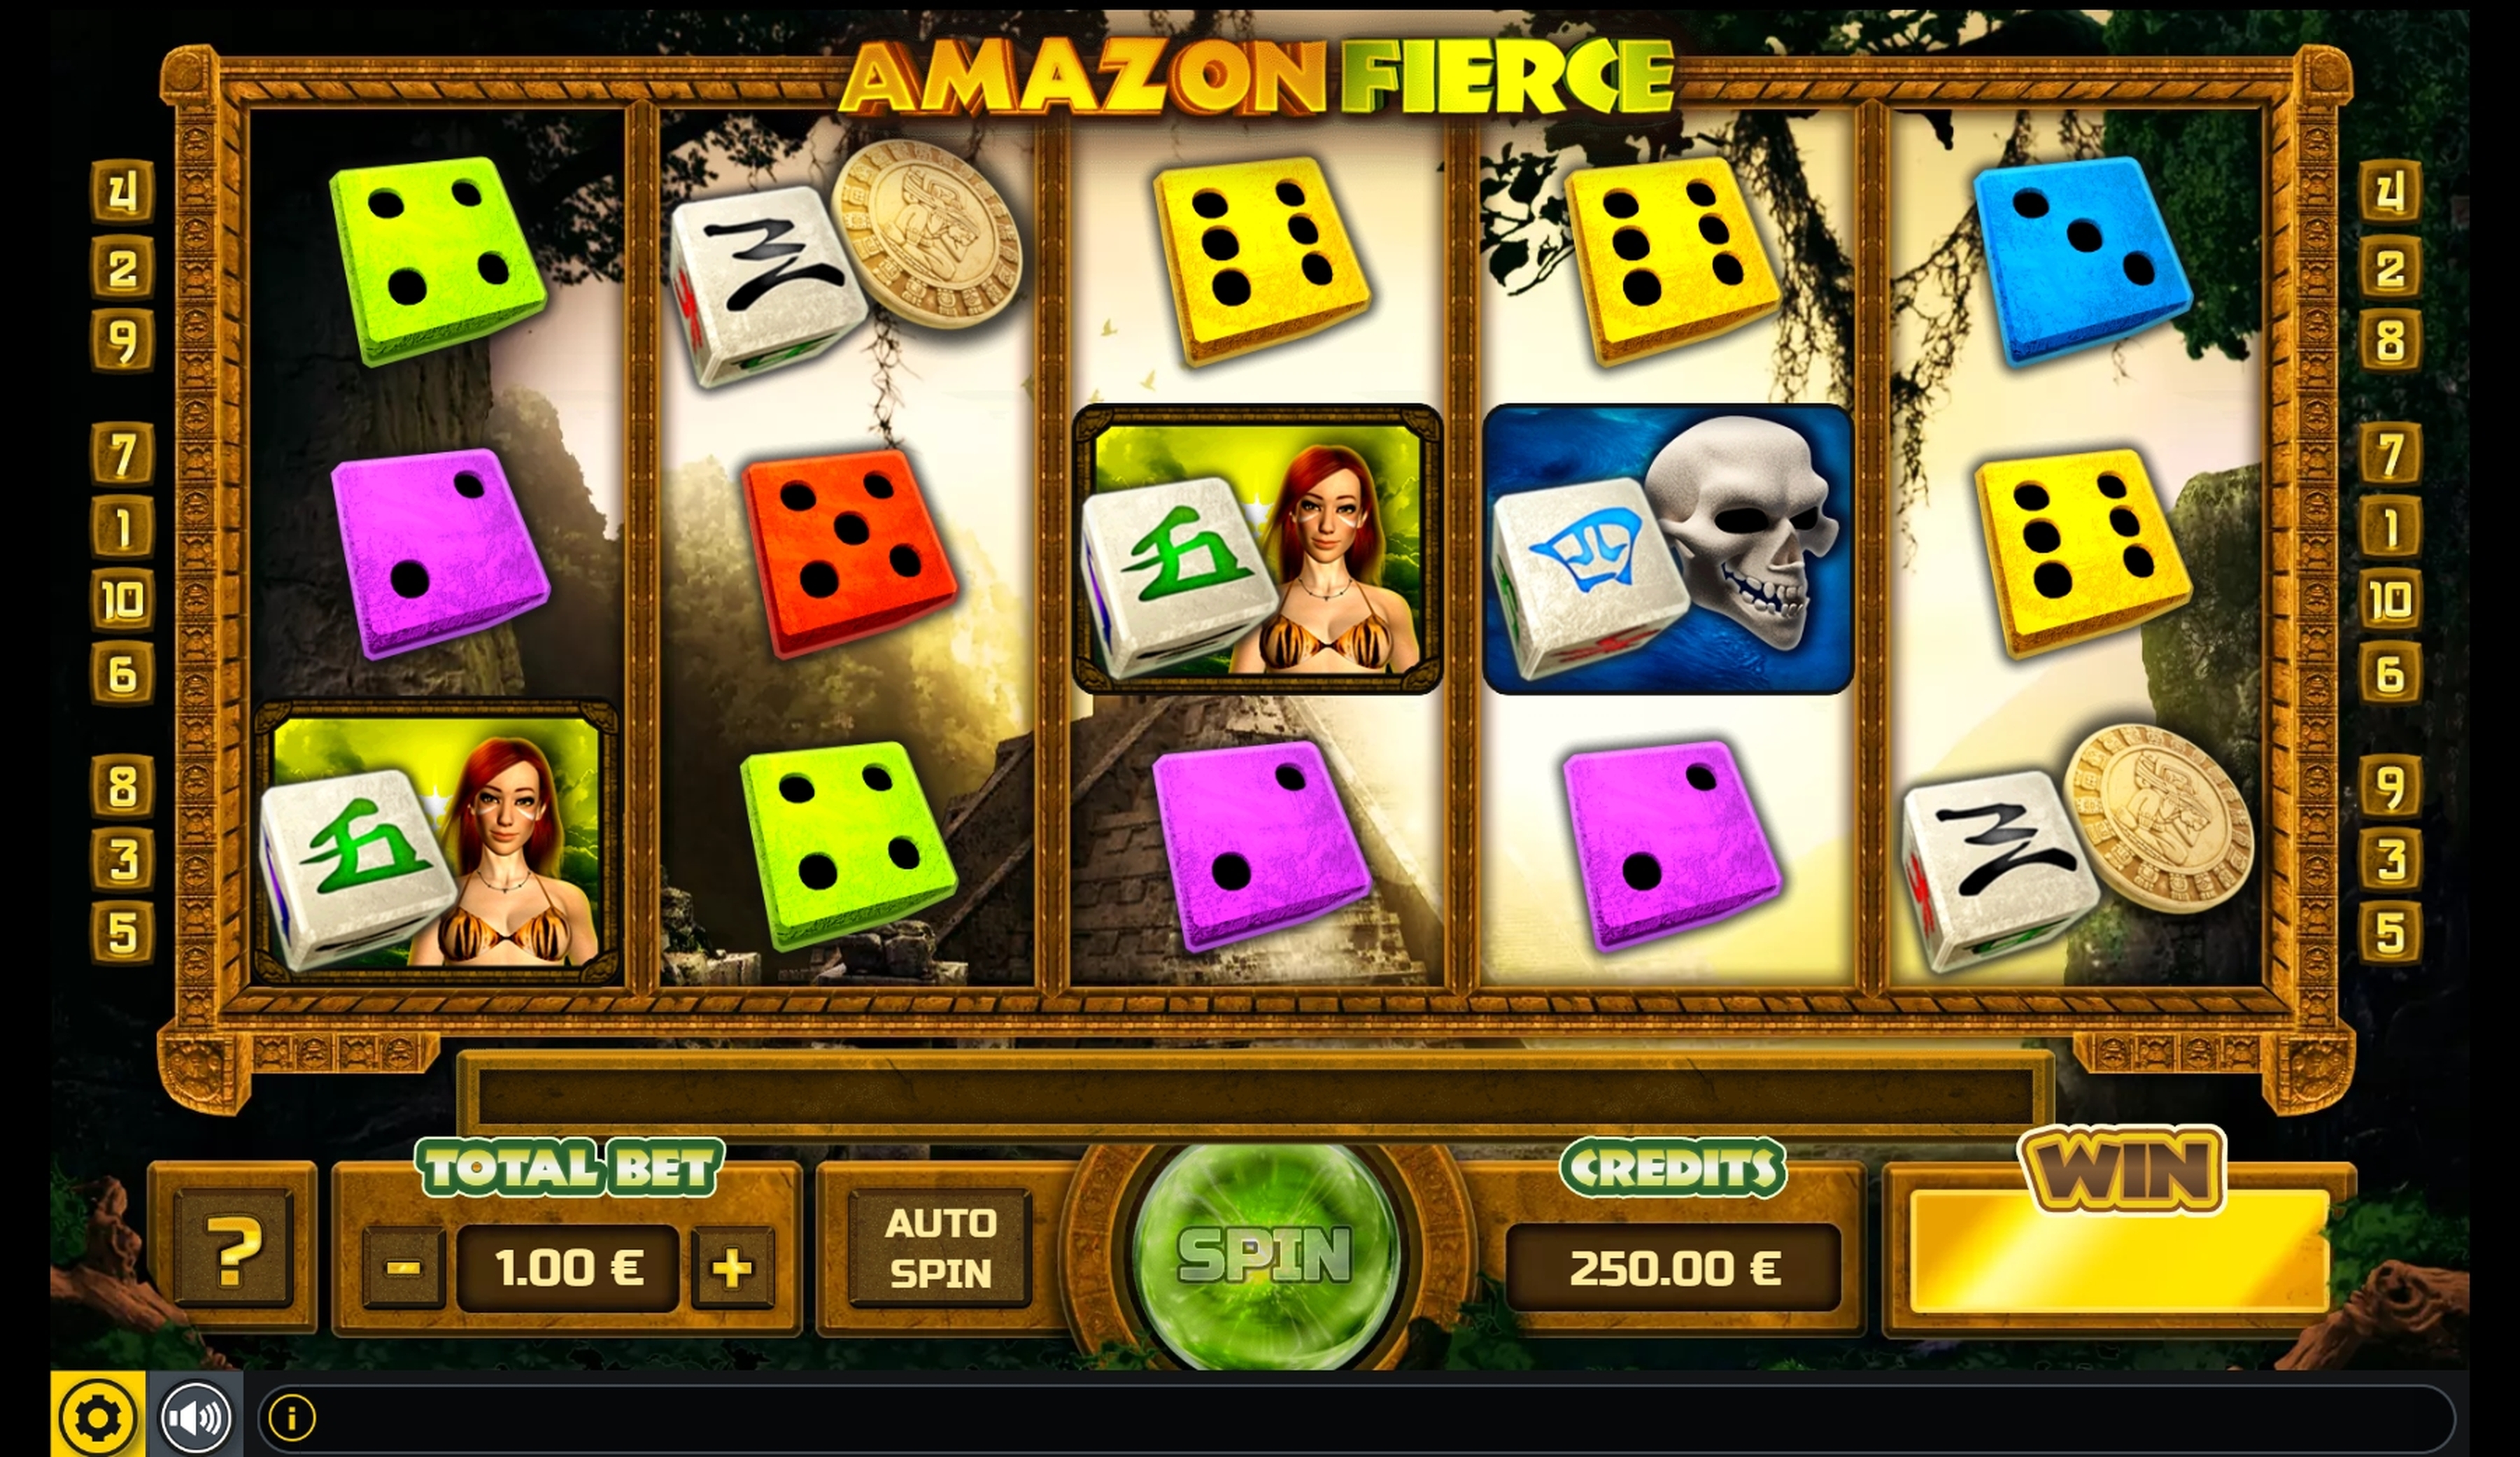 Reels in Amazon Fierce Slot Game by GAMING1